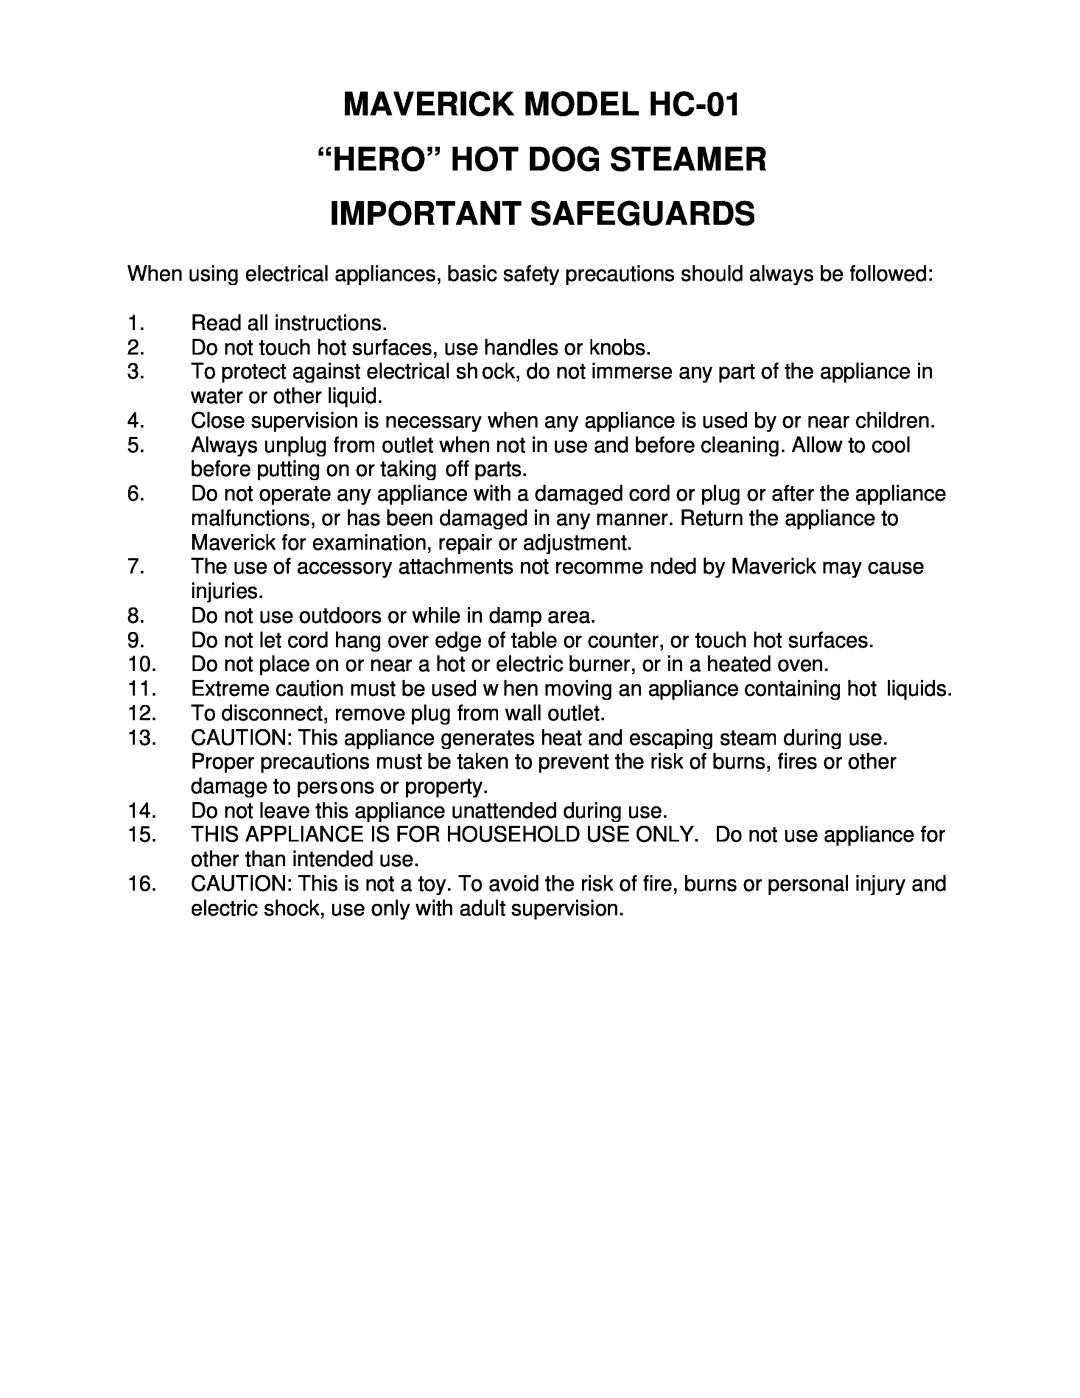 Maverick Ventures manual MAVERICK MODEL HC-01, “Hero” Hot Dog Steamer Important Safeguards 